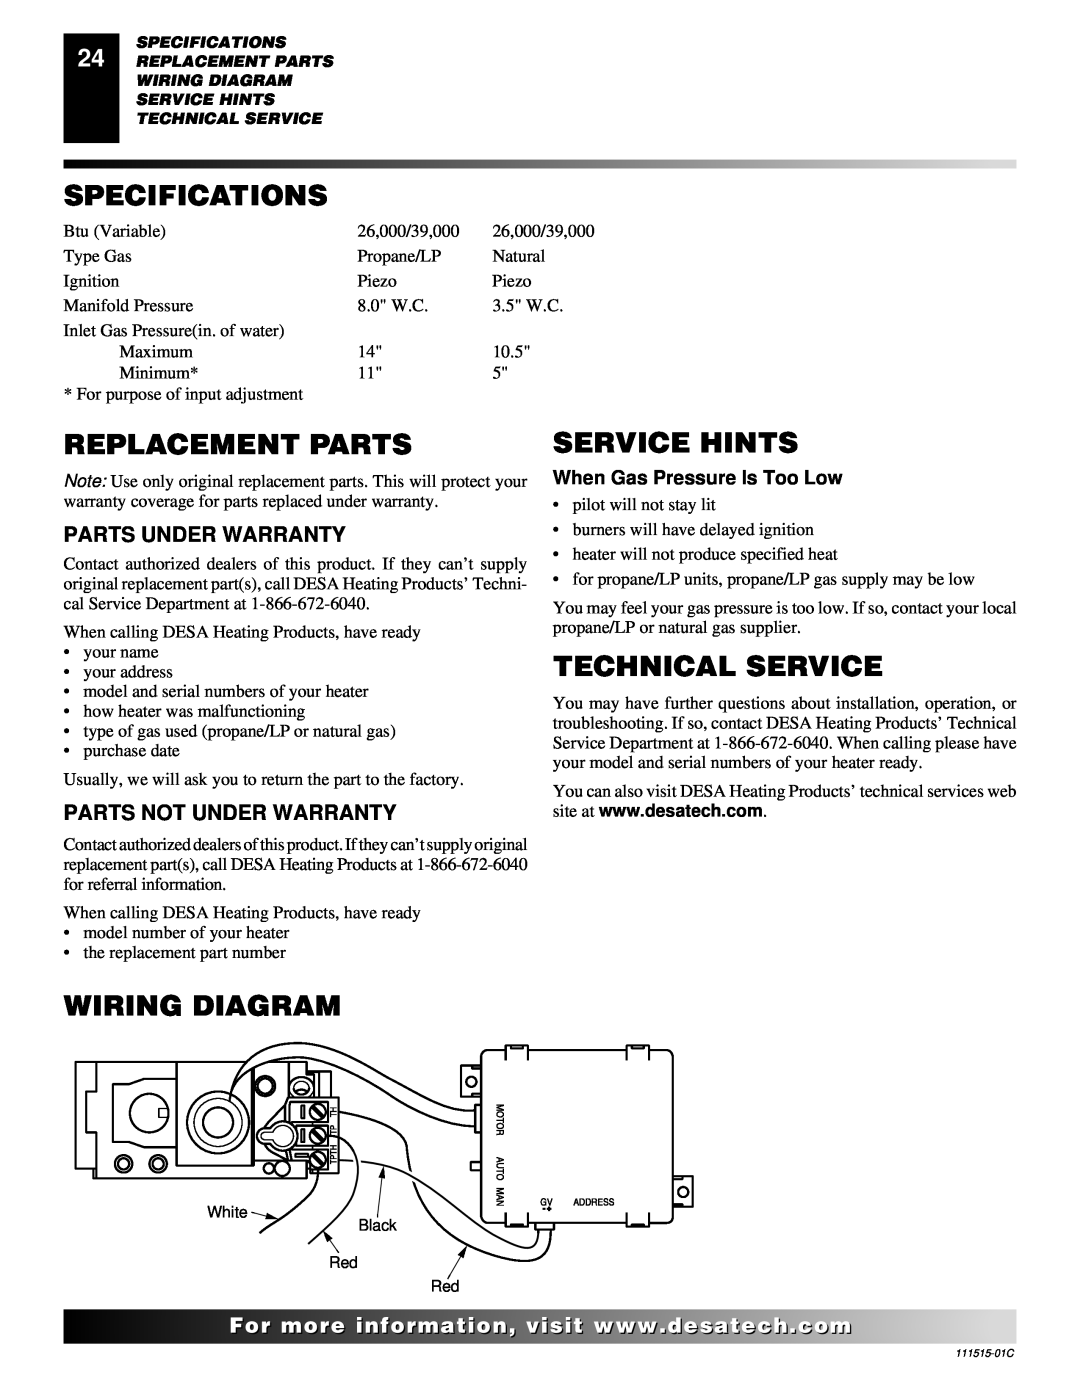 Desa LDL3930PR Specifications, Replacement Parts, Wiring Diagram, Service Hints, Technical Service, Parts Under Warranty 